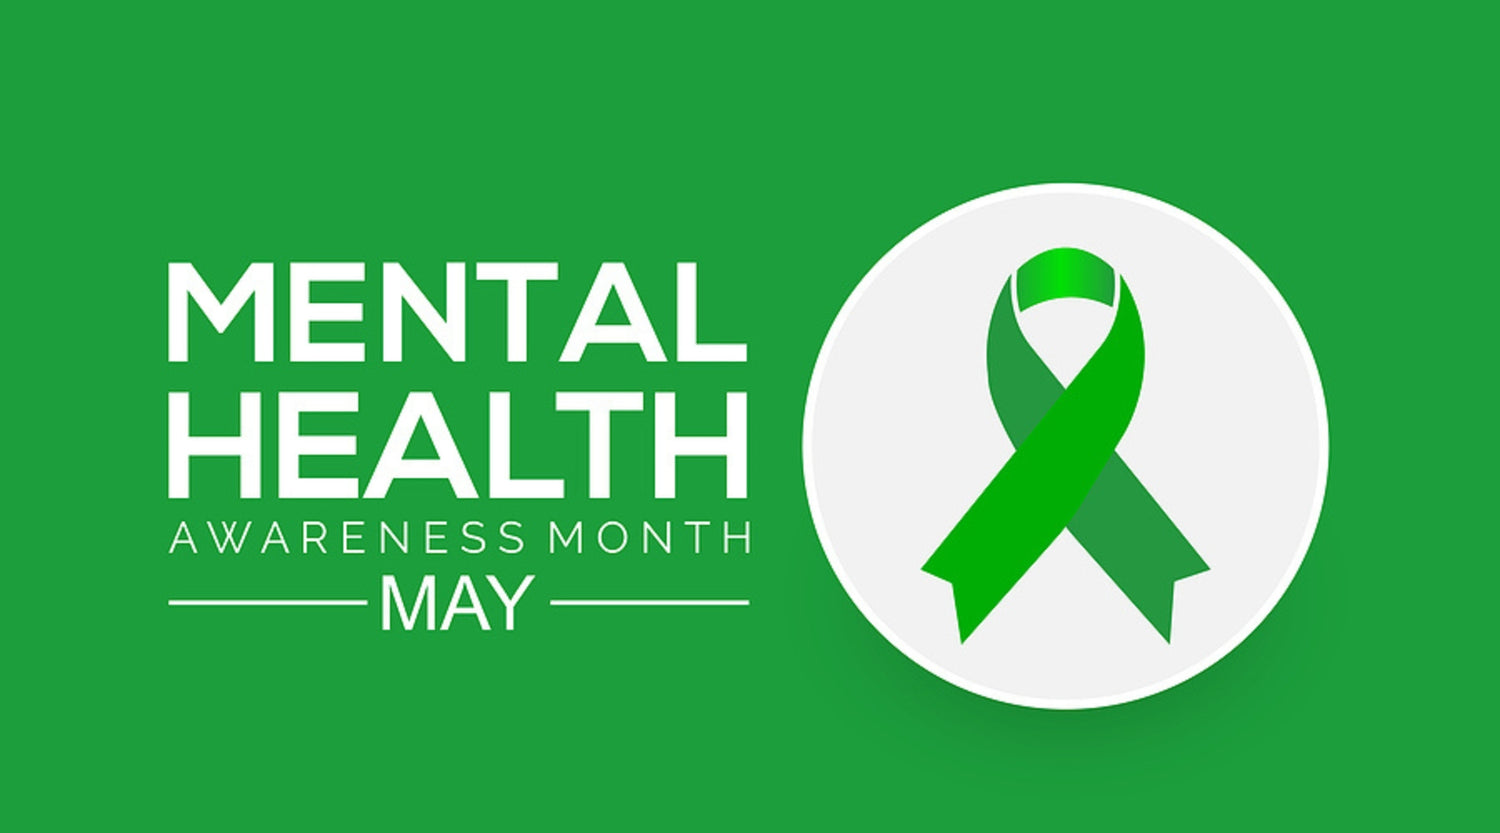 It's Mental Health Awareness Month